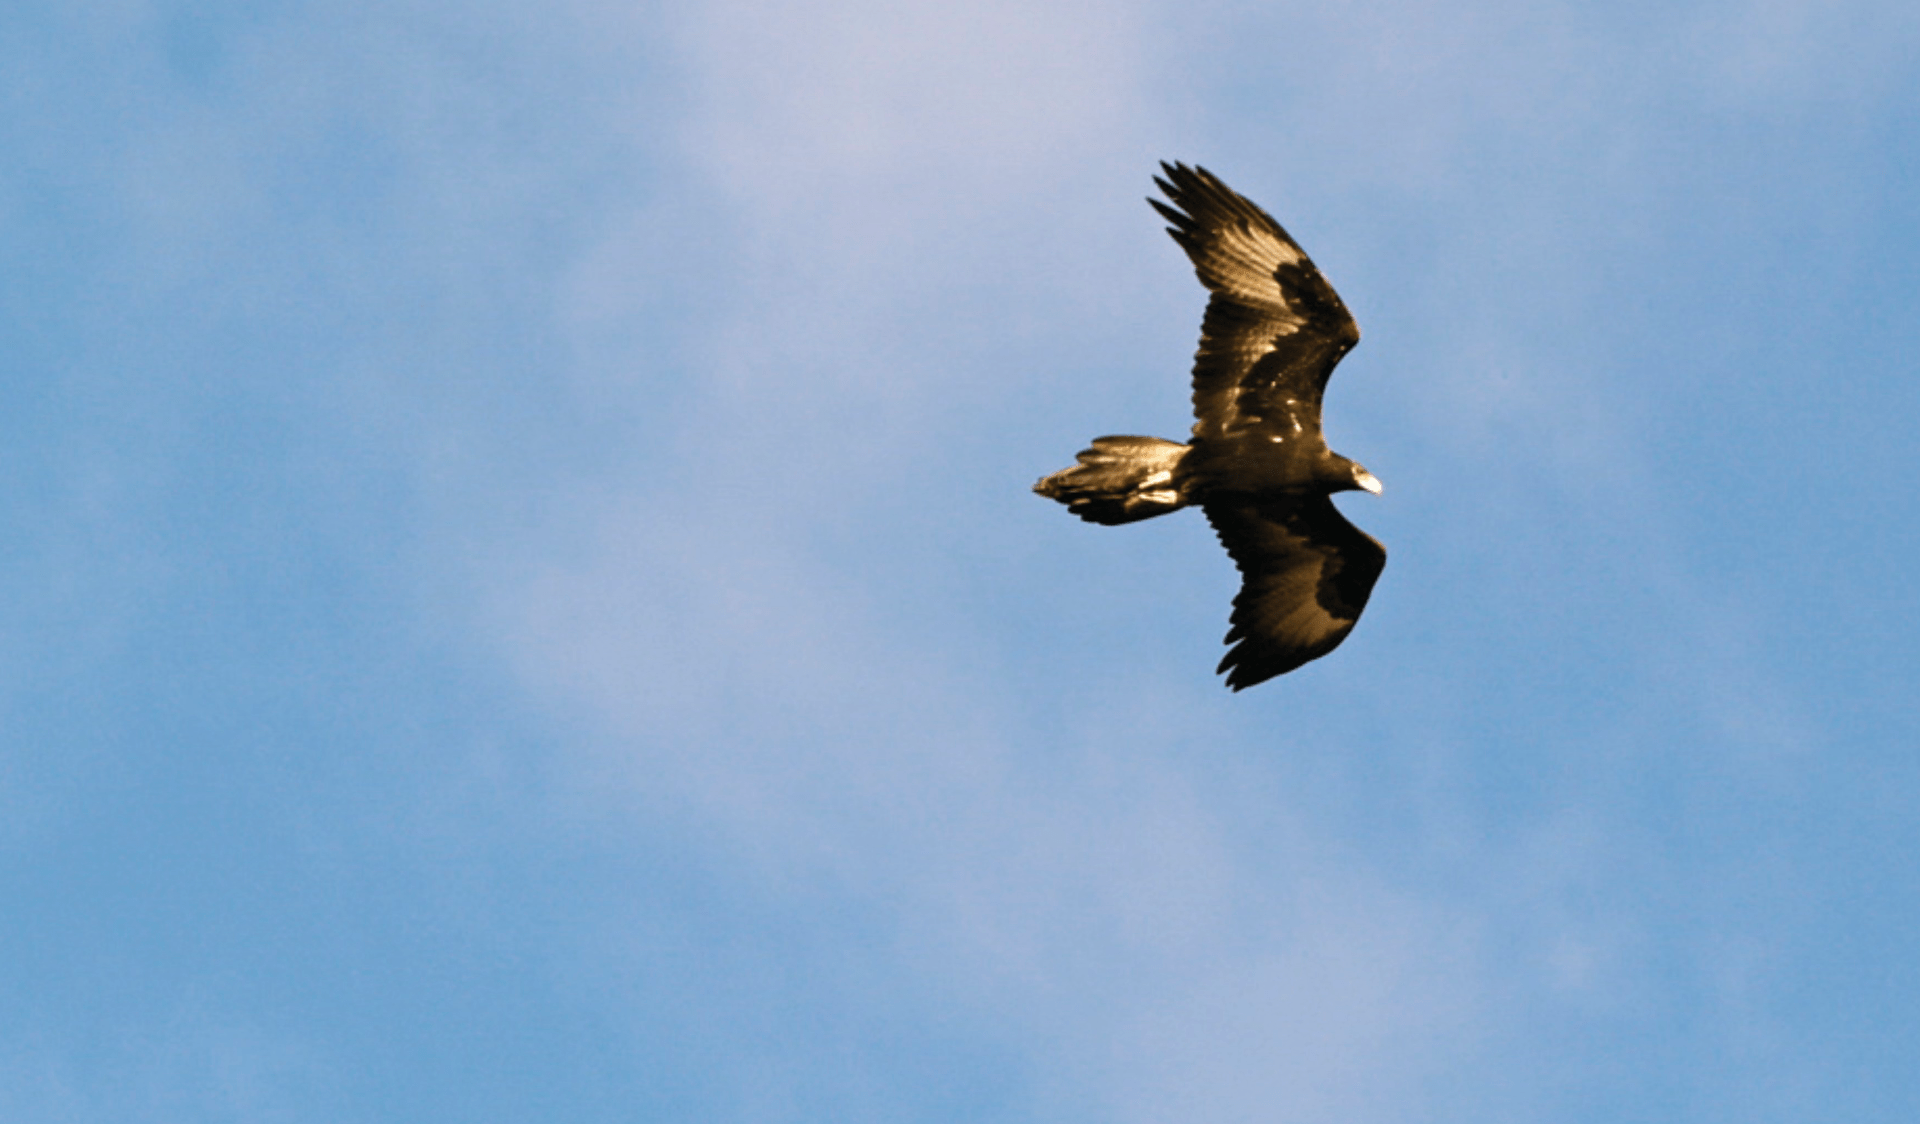 A wedge tail eagle against a blue sky